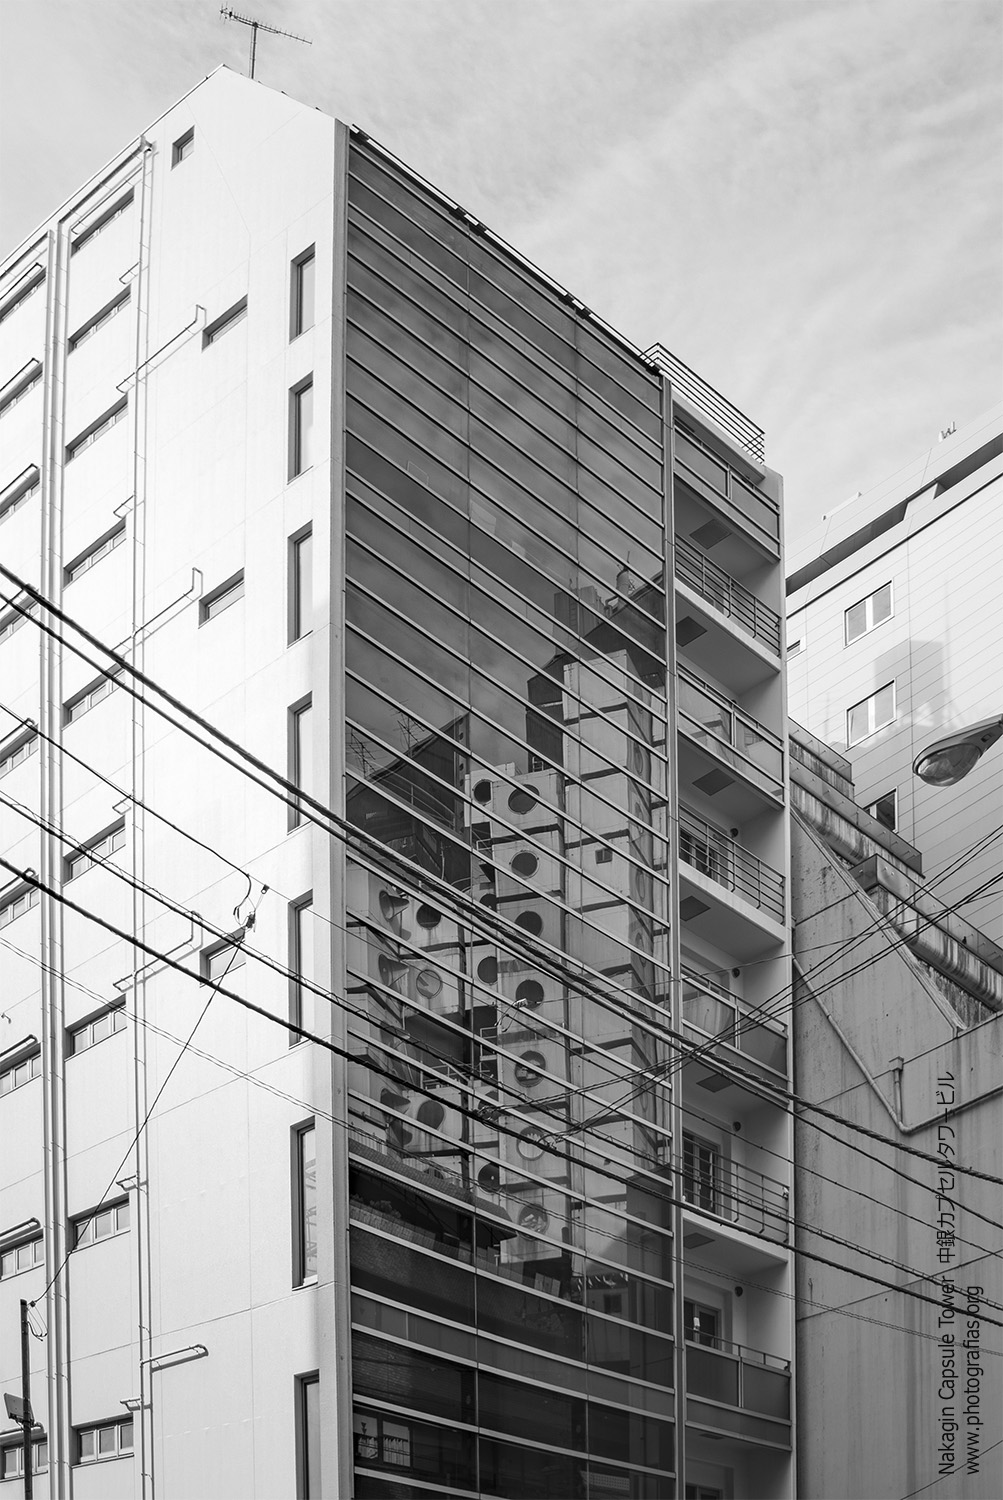 Nakagin Capsule Tower - By Architect Kisho Kurokawa - Metabolism Architecture - Tokyo, Japan. 中銀カプセルタワービル - 黒川 紀章. #Architect #Architecture #Nakagin #NakaginCapsuleTower #saveNakagin #kurokawa #Metabolism #Architecturedesign #modernarchitecture #Design #Tokyo #Japan http://photografias.org